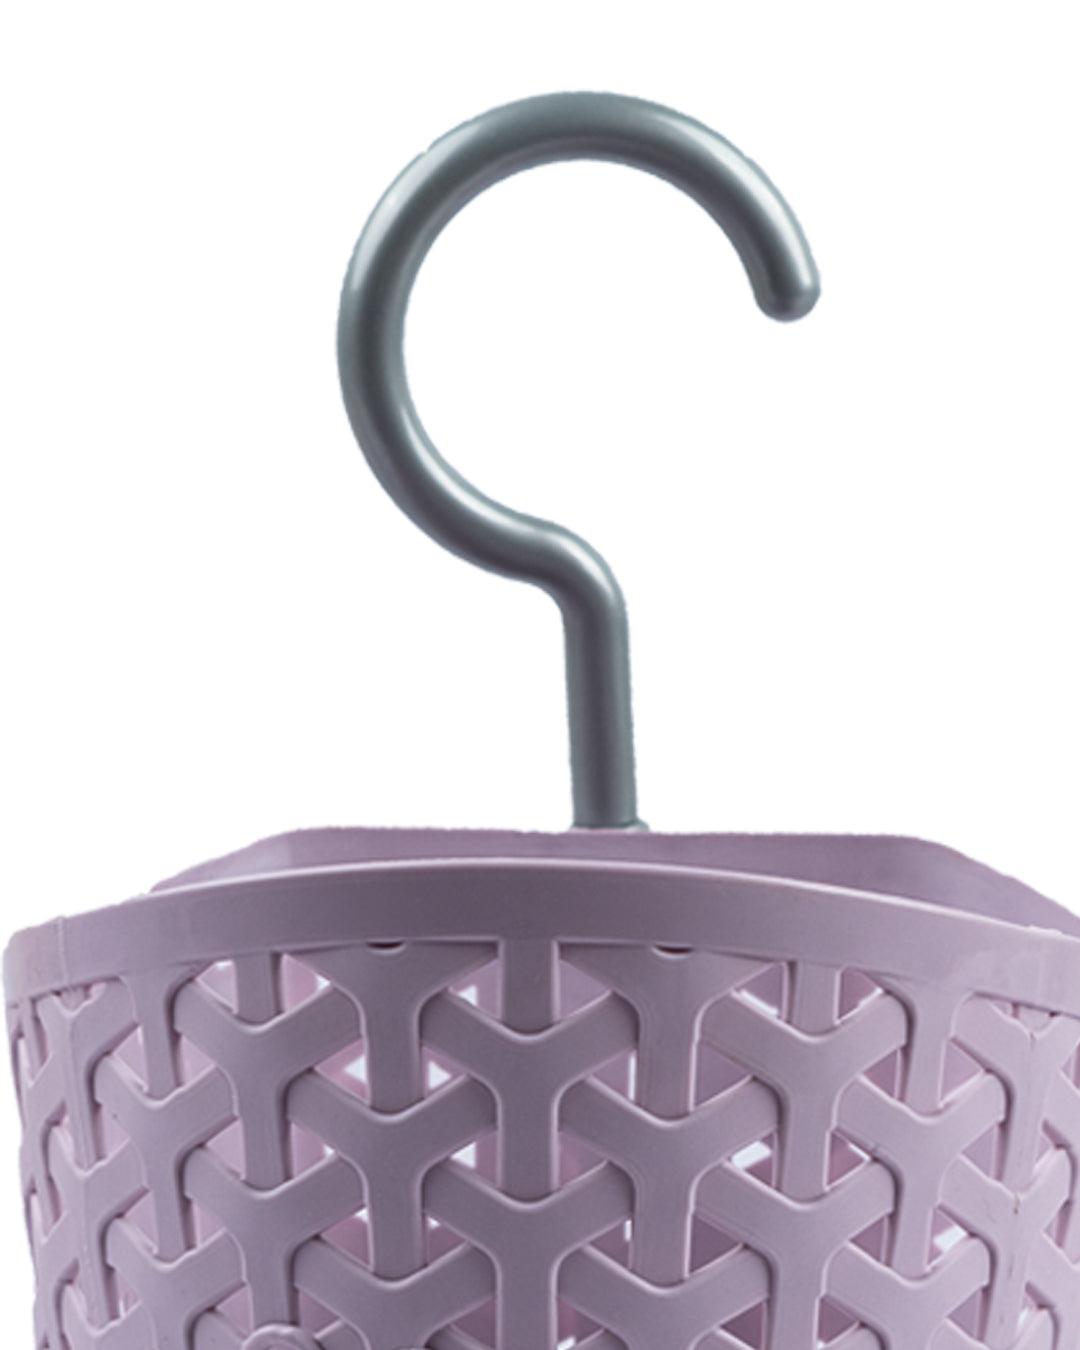 Baskets with Hook, Purple, Plastic, Set of 2 - MARKET 99